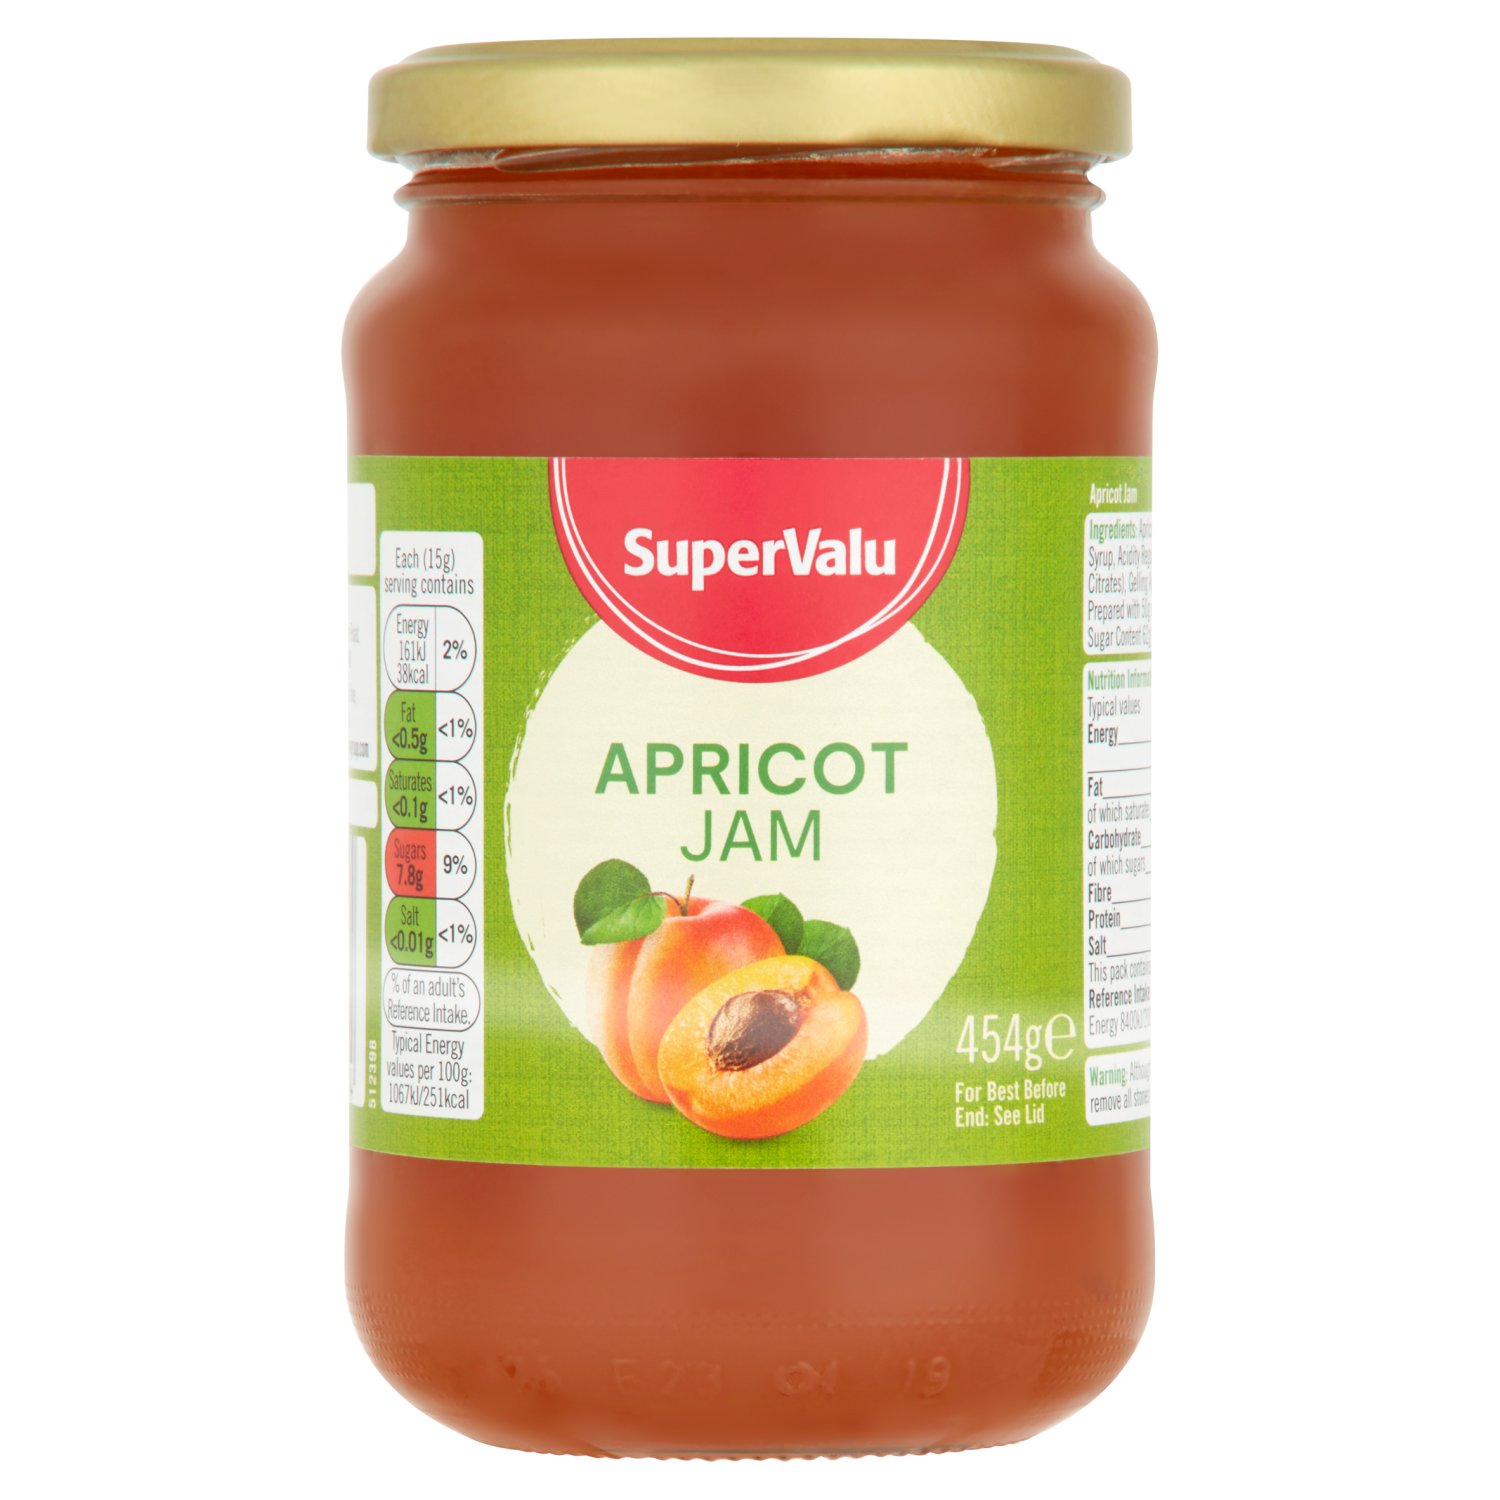 SuperValu Apricot Jam 454g